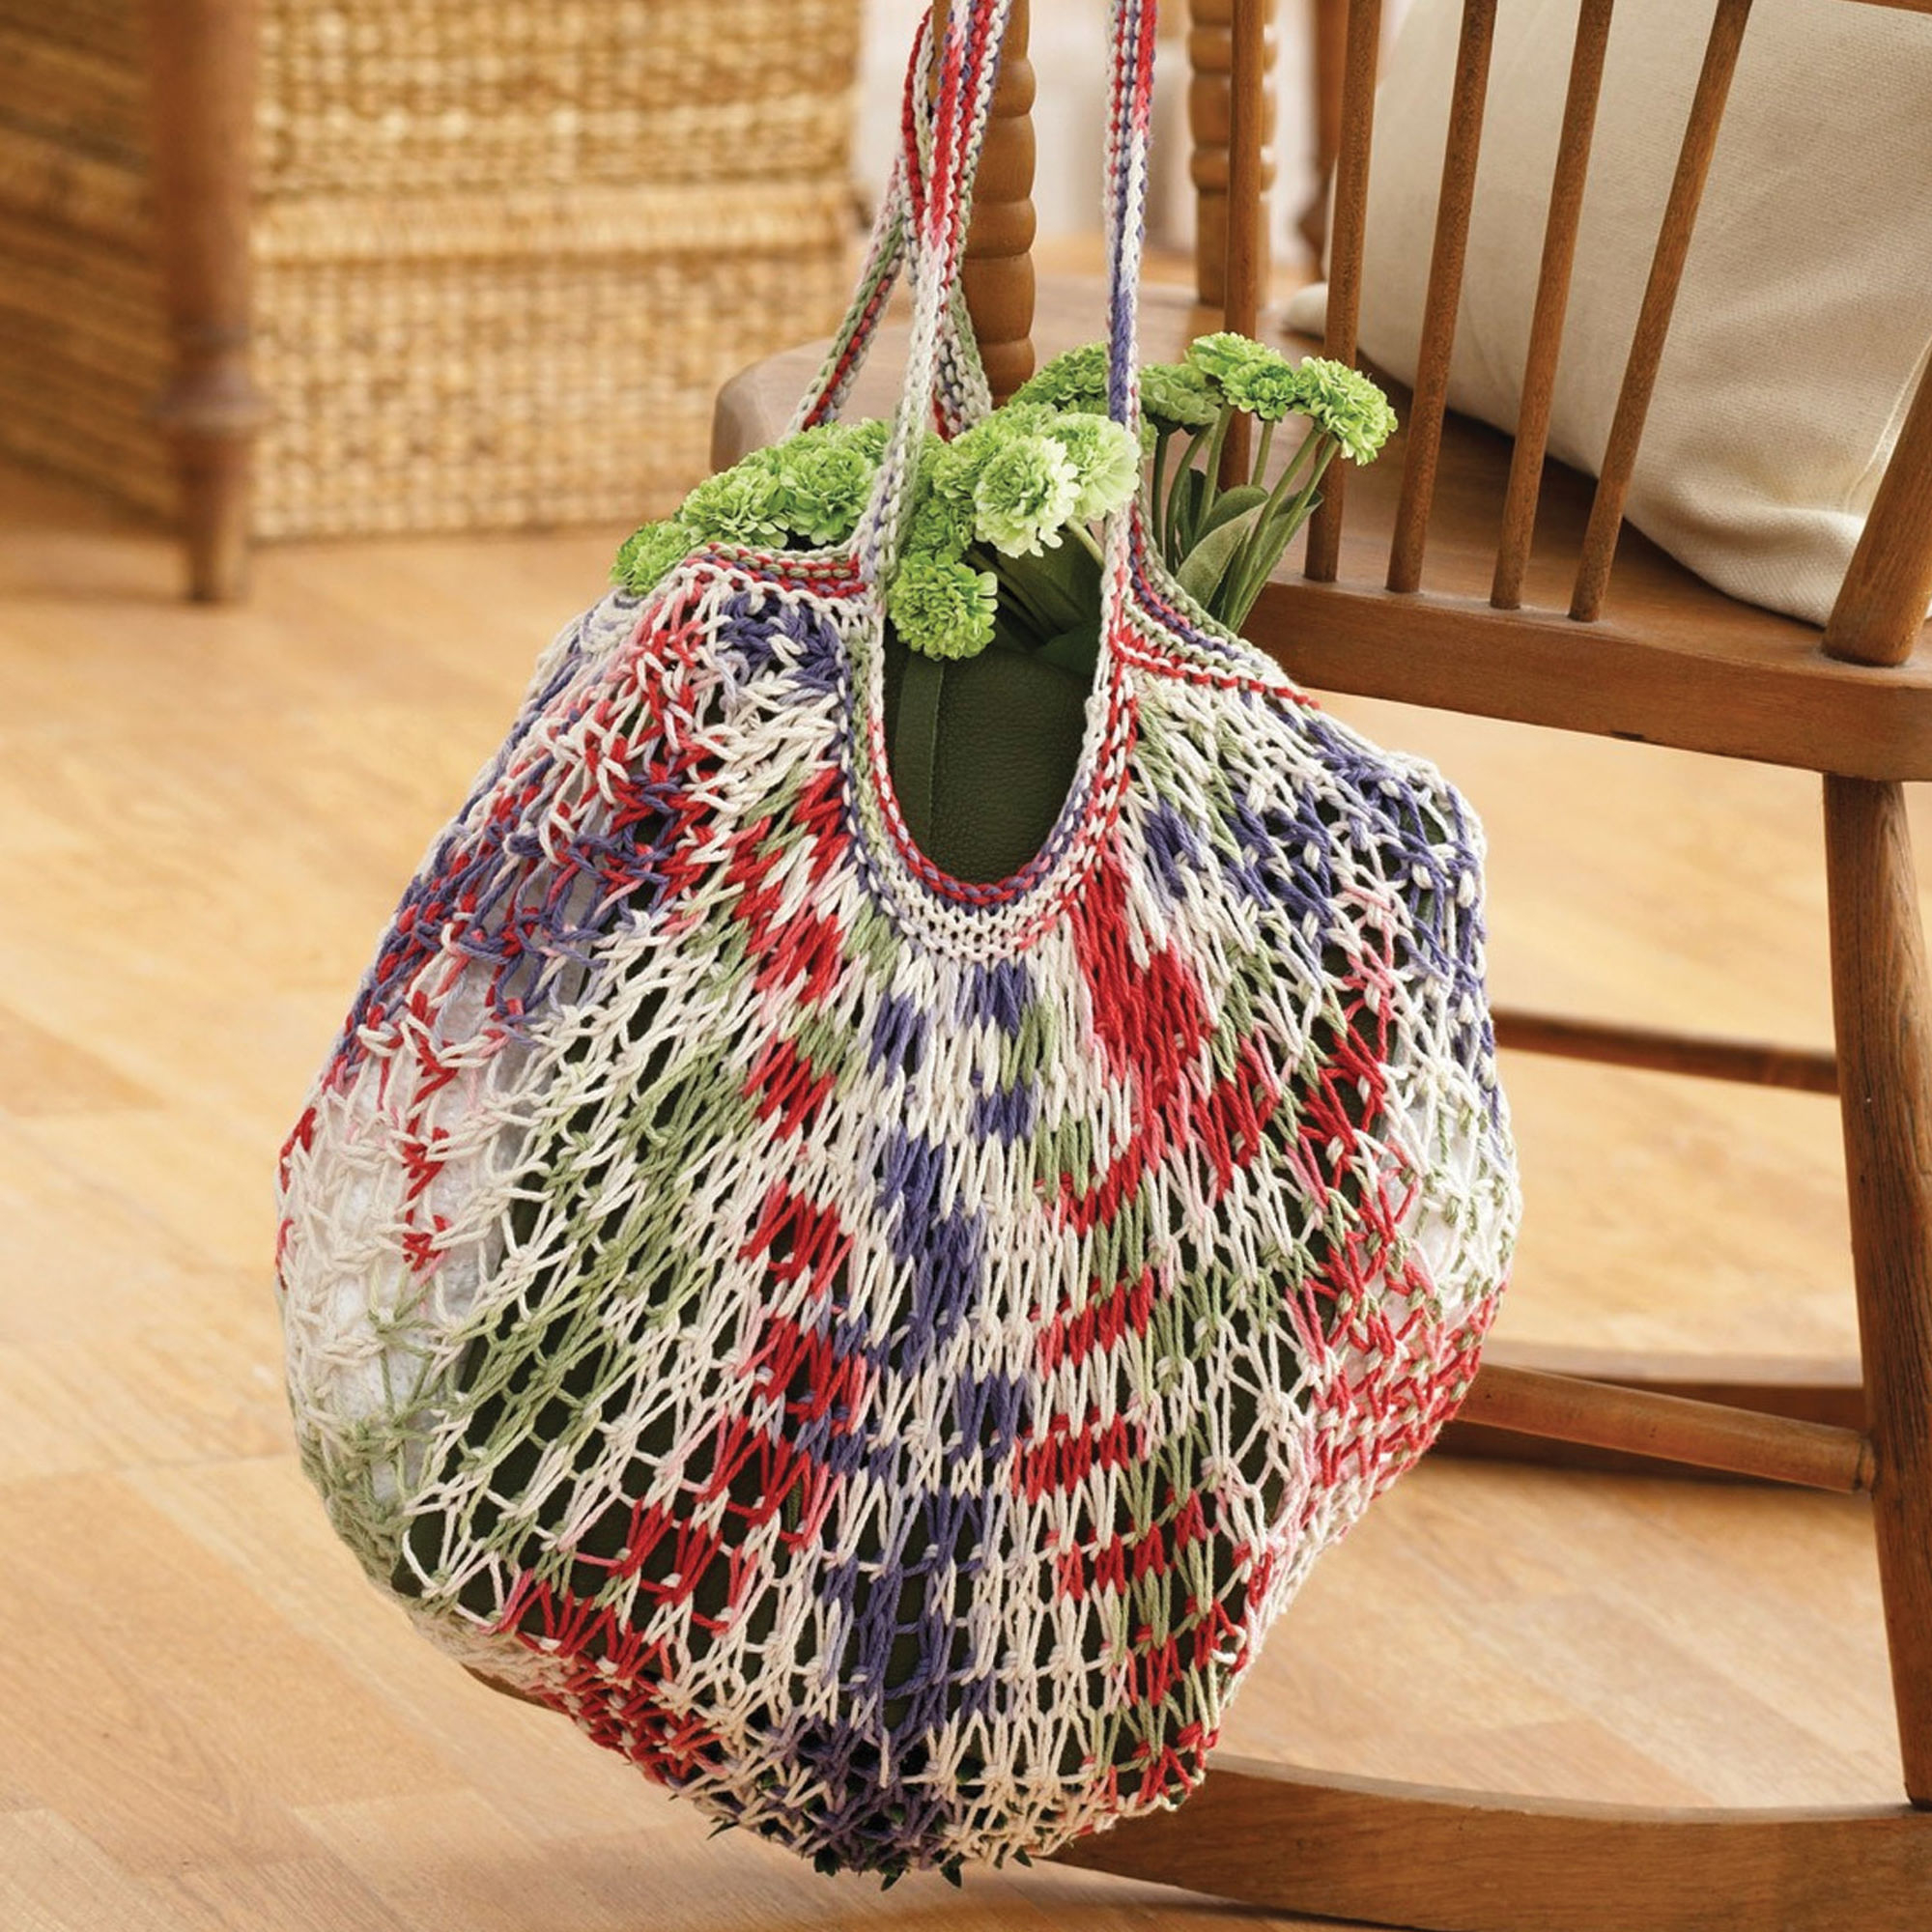 Knitrowan Com Free Knitting Patterns Free Knitting Patterns For Market Bags